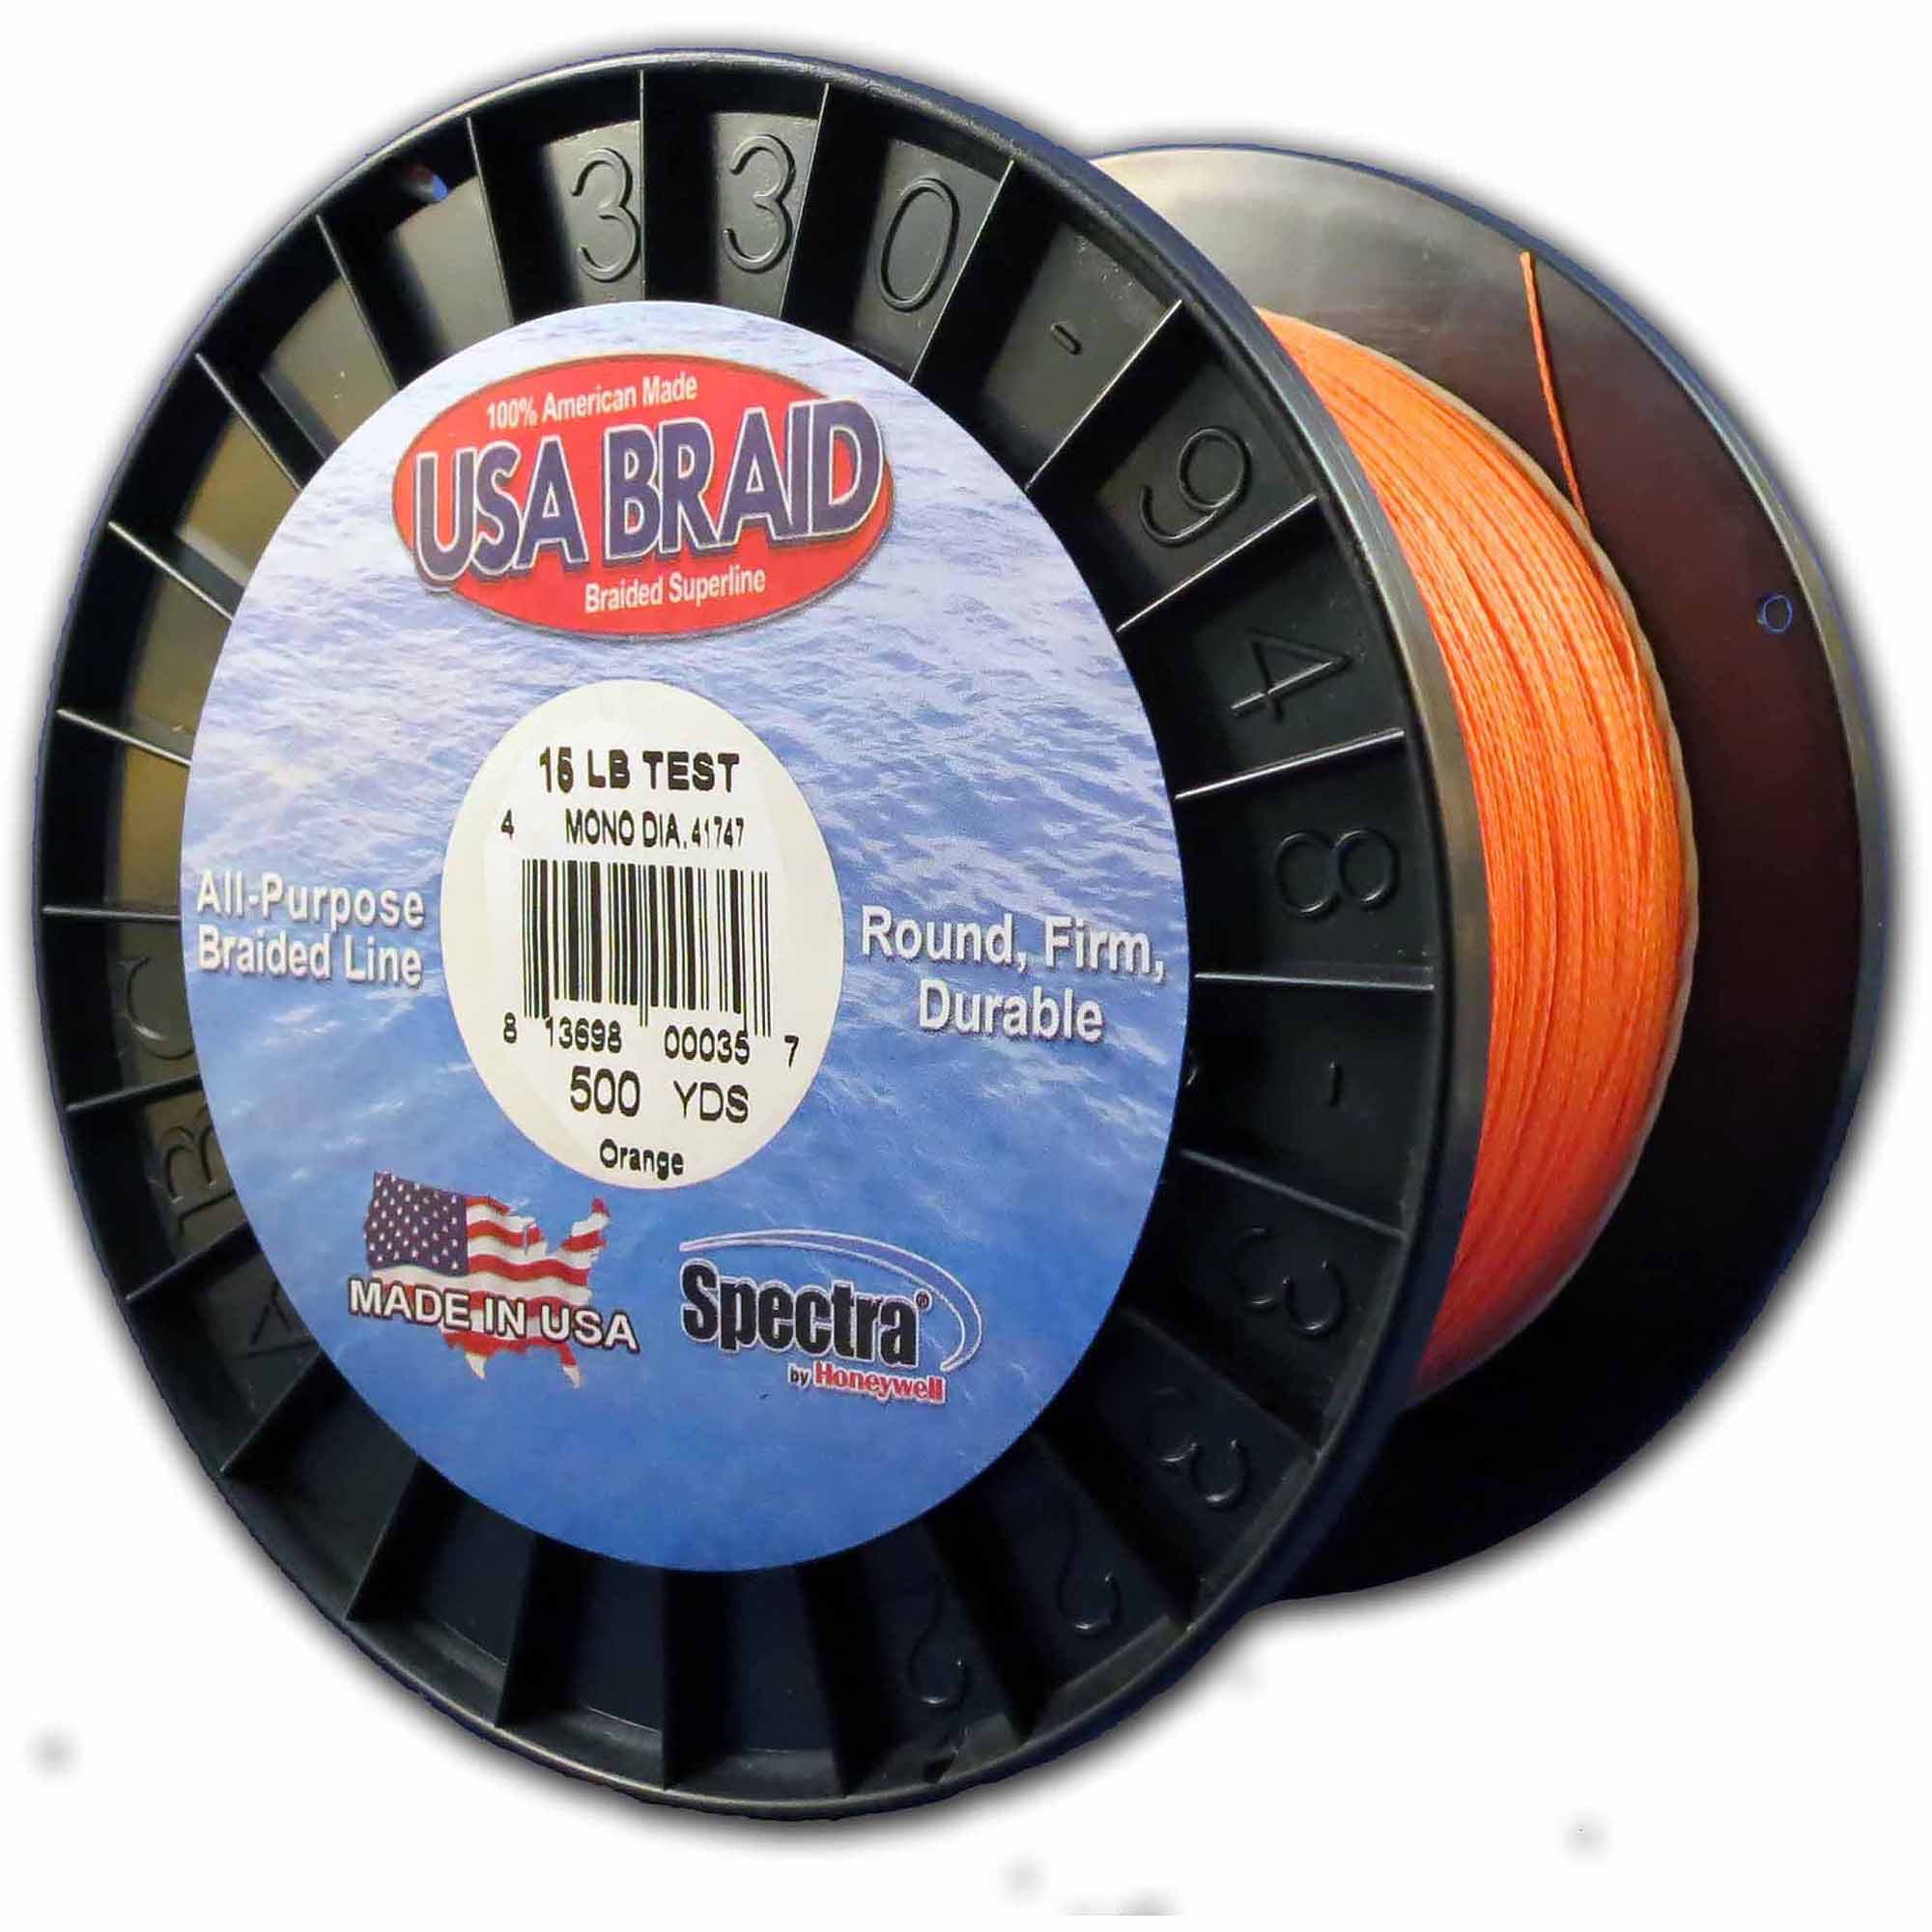 USA BRAID 15lb Braided Superline, 500yds, Orange